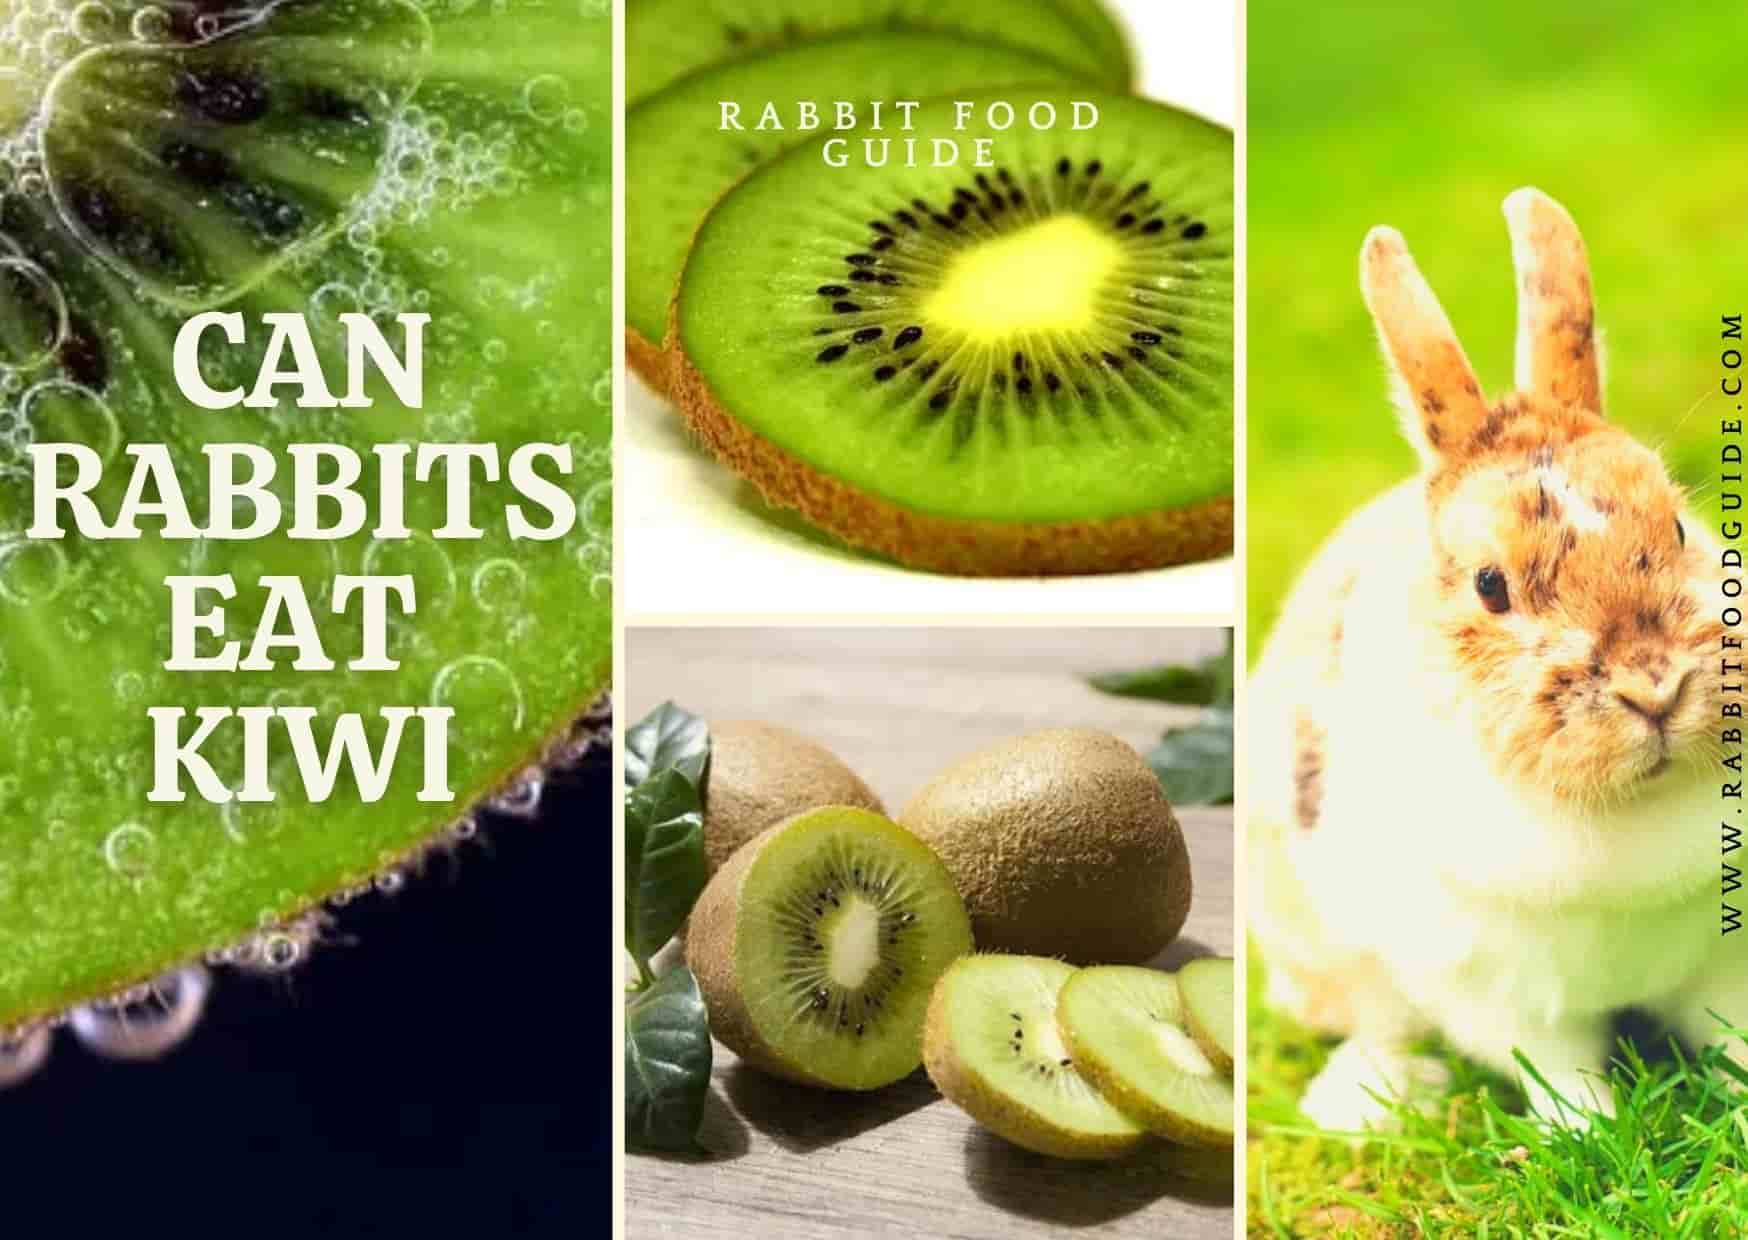 Can rabbits eat kiwi?